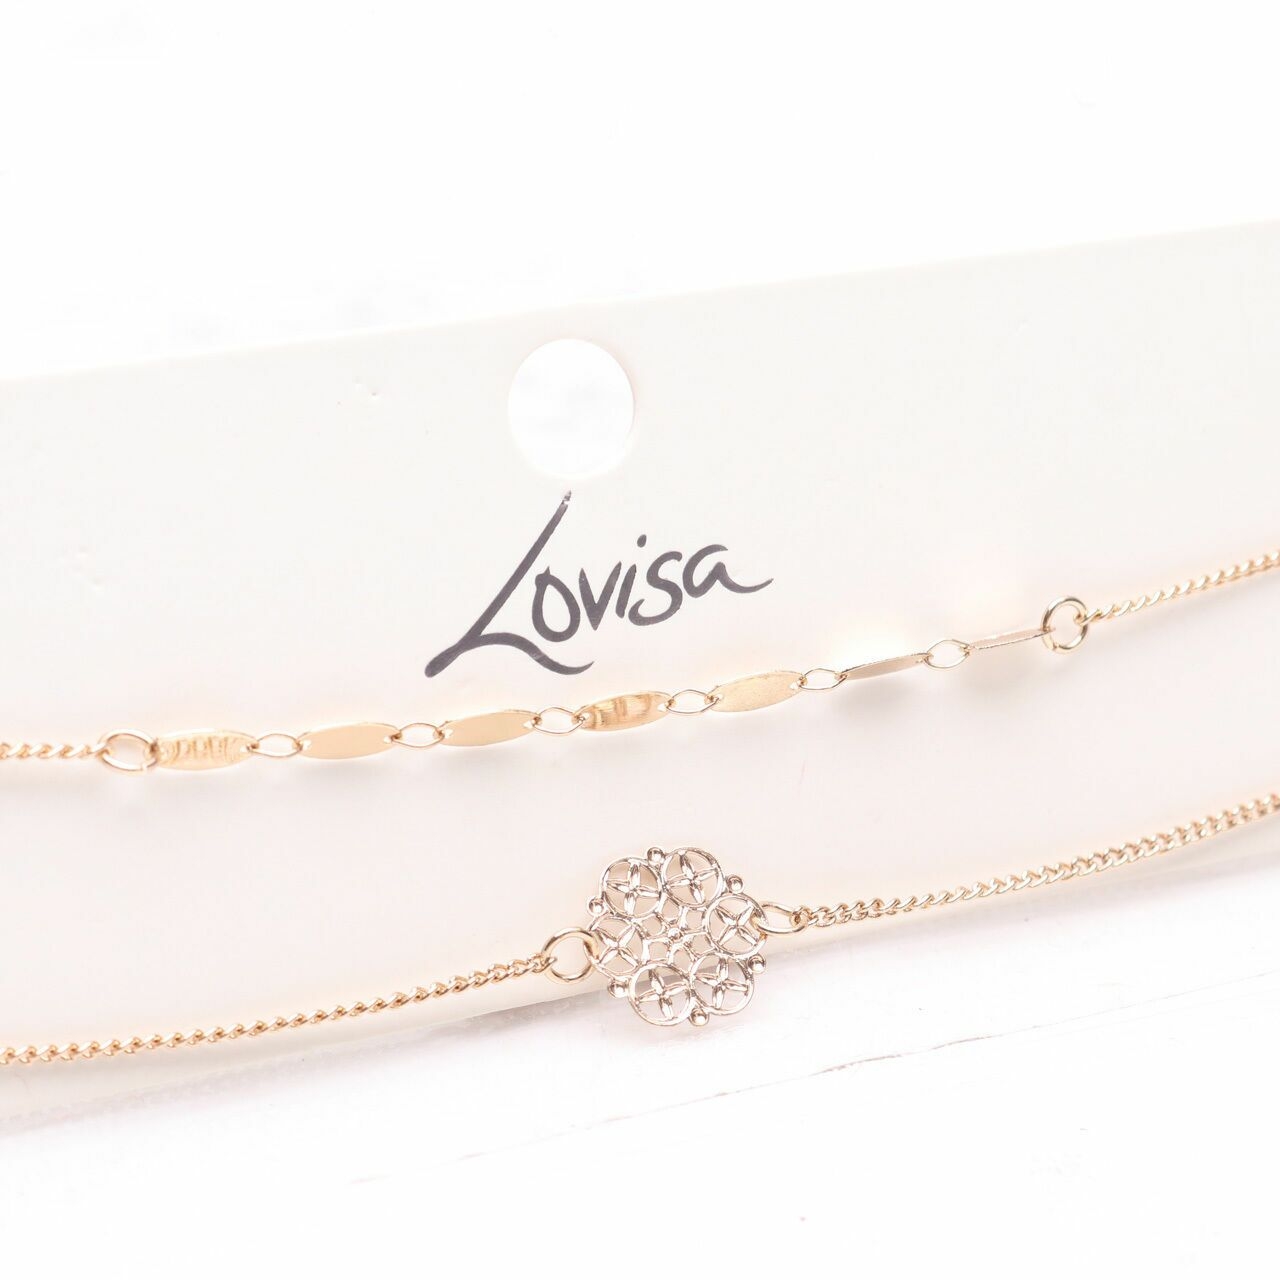 Lovisa Gold Choker Necklace Jewelery